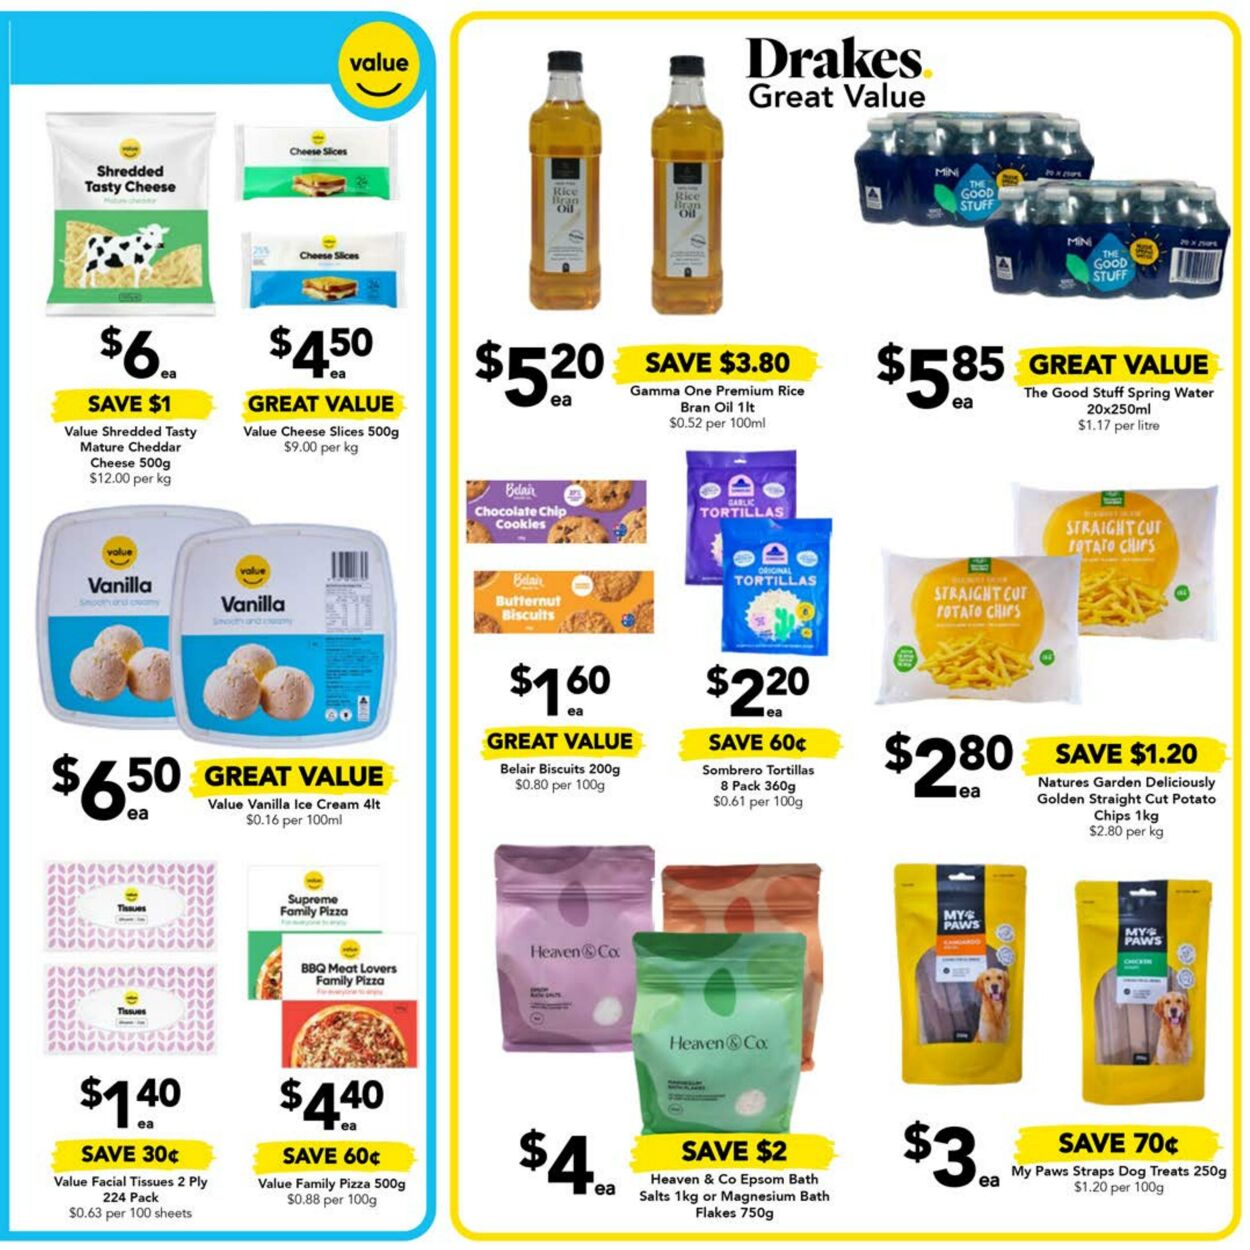 Catalogue Drakes Supermarkets 19.06.2024 - 25.06.2024